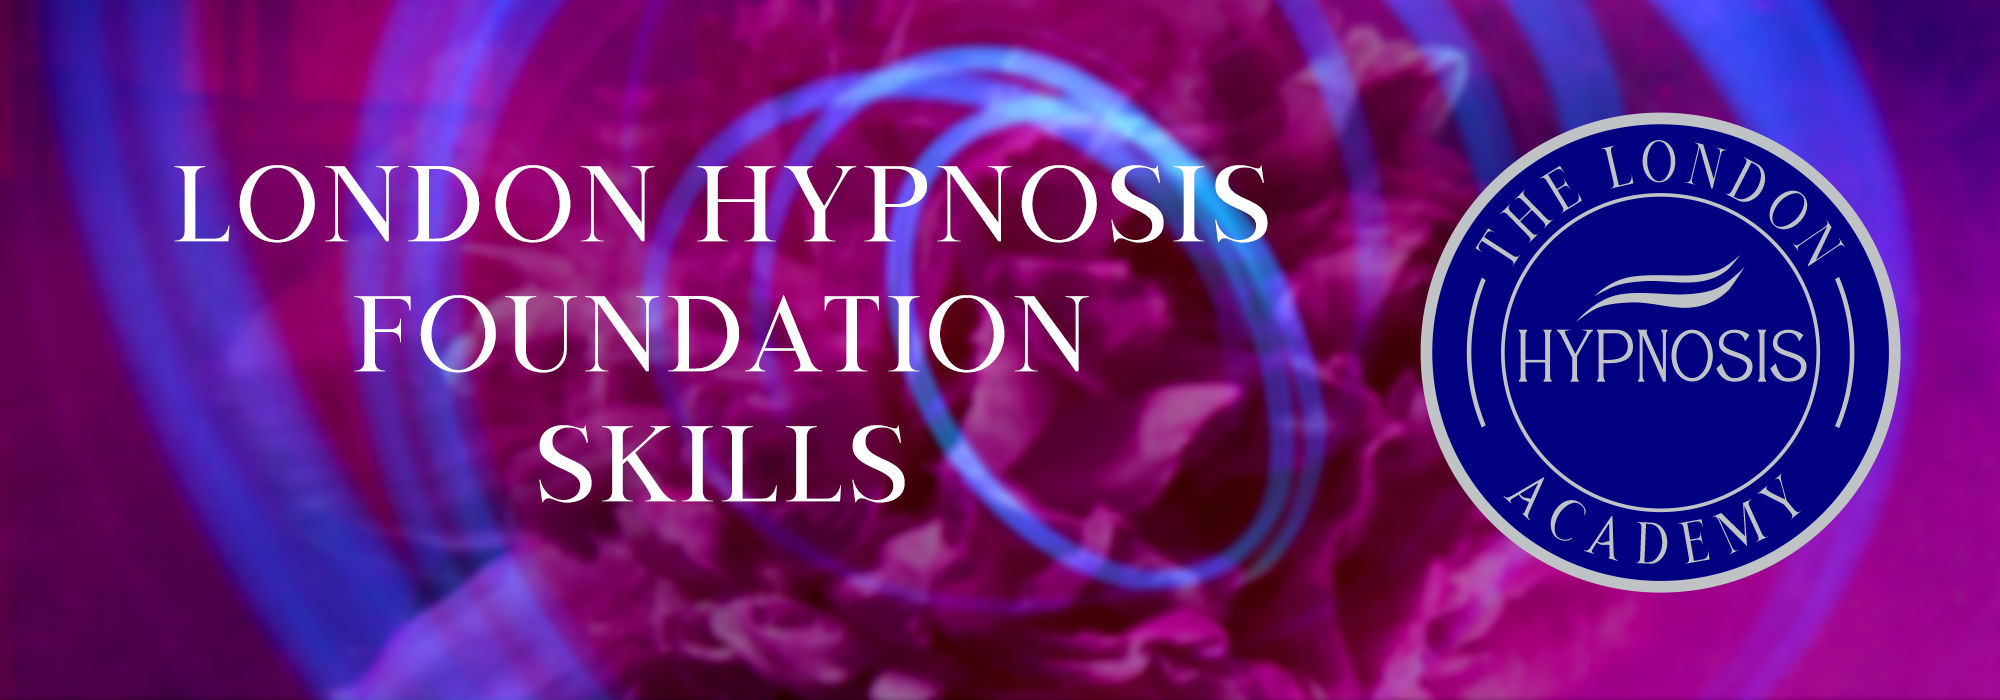 London Hypnosis Foundation Skills